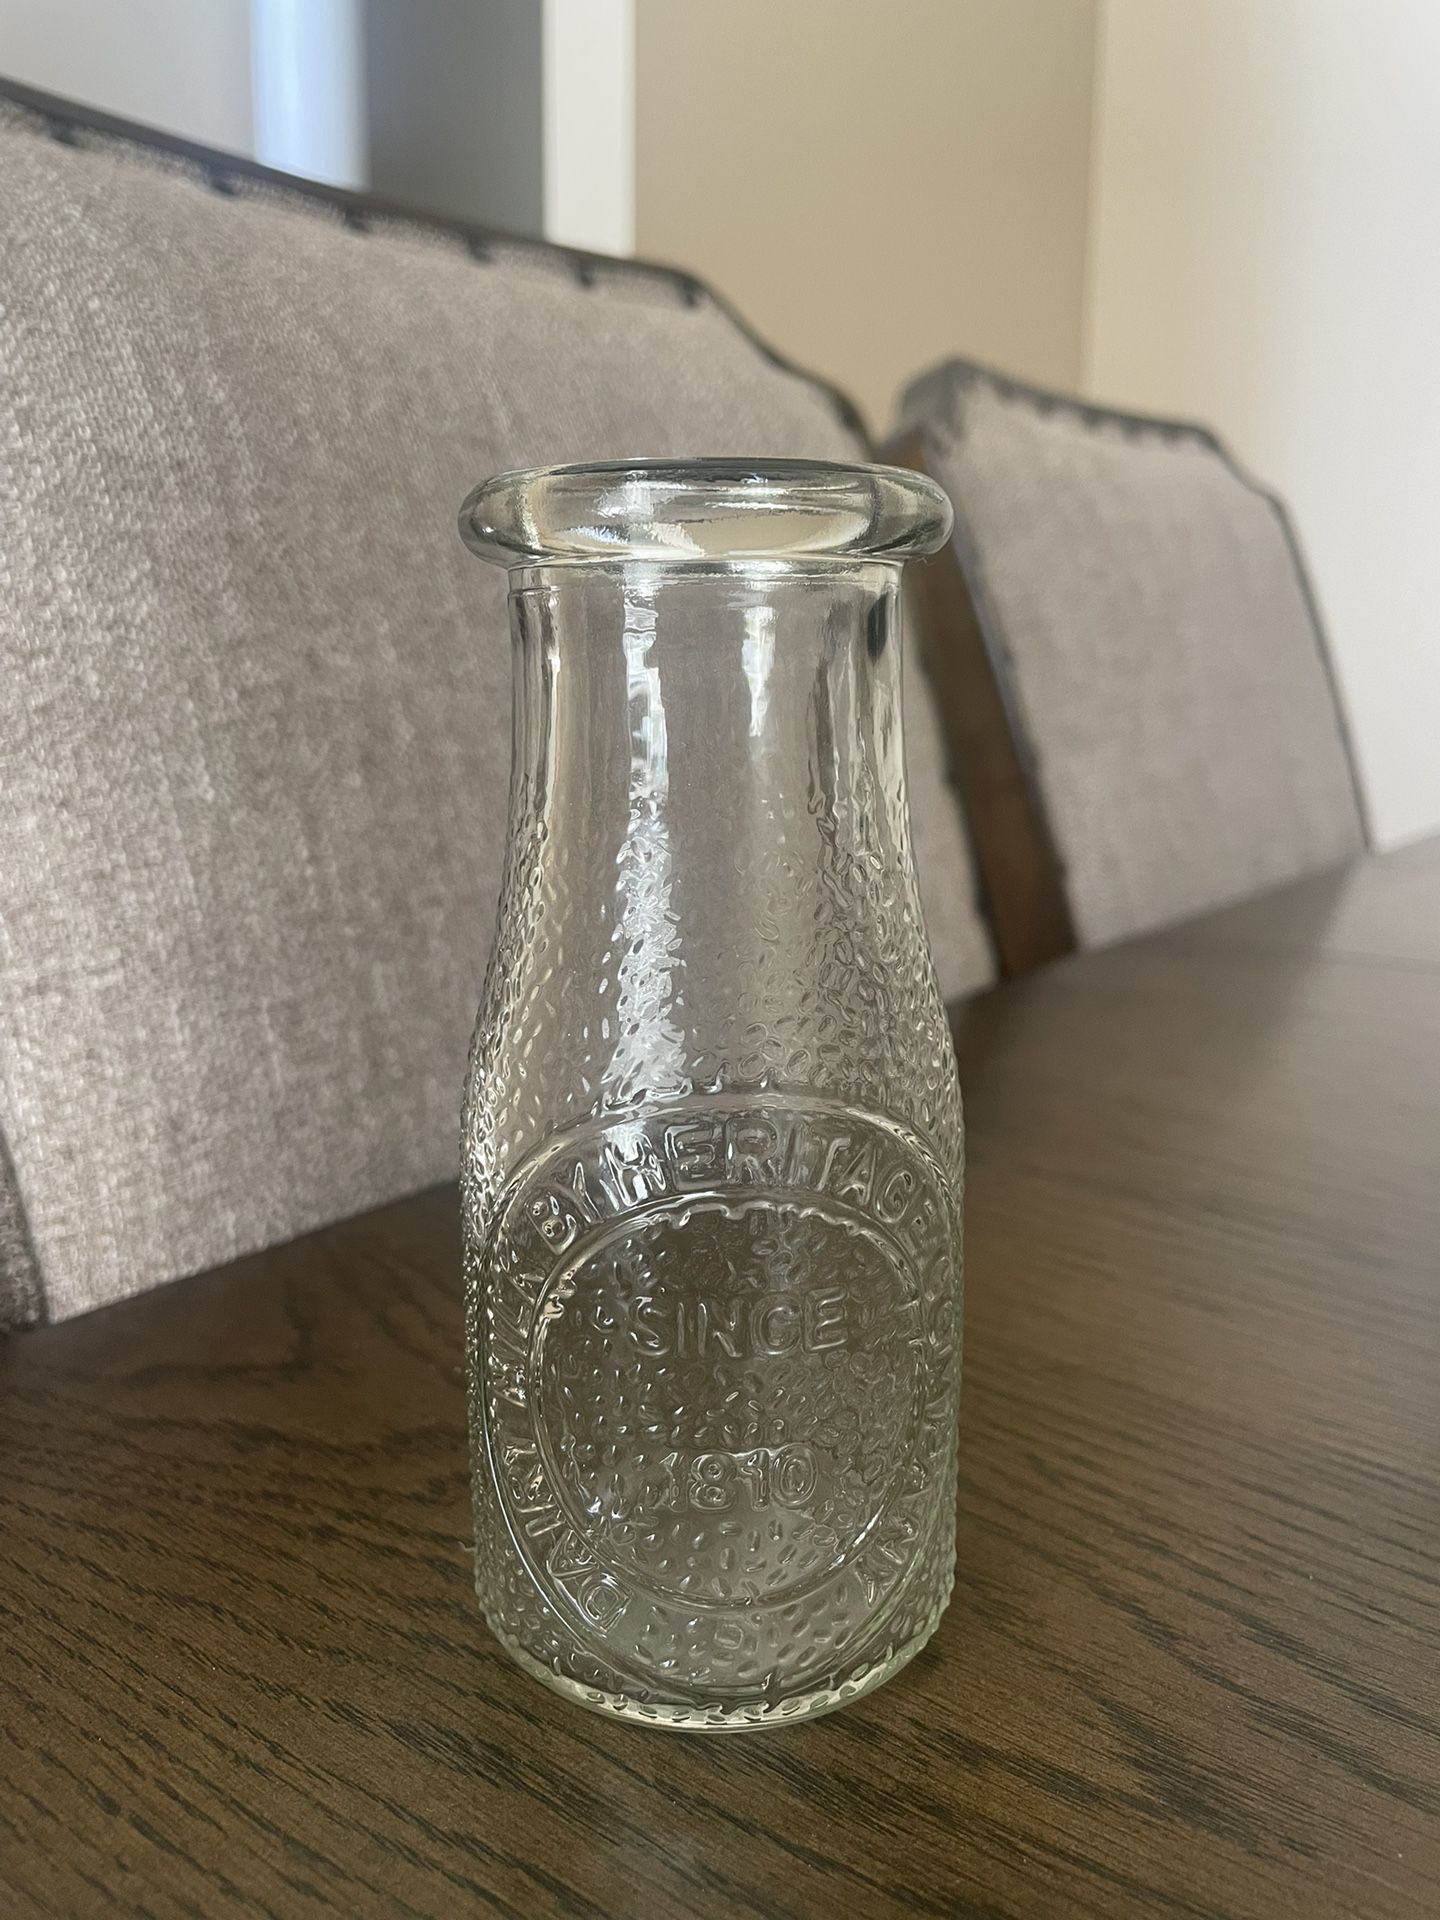 VINTAGE "DAIRY MILK BY HERITAGE COMPANY" Glass Milk Bottle.  Since 1810 Center 